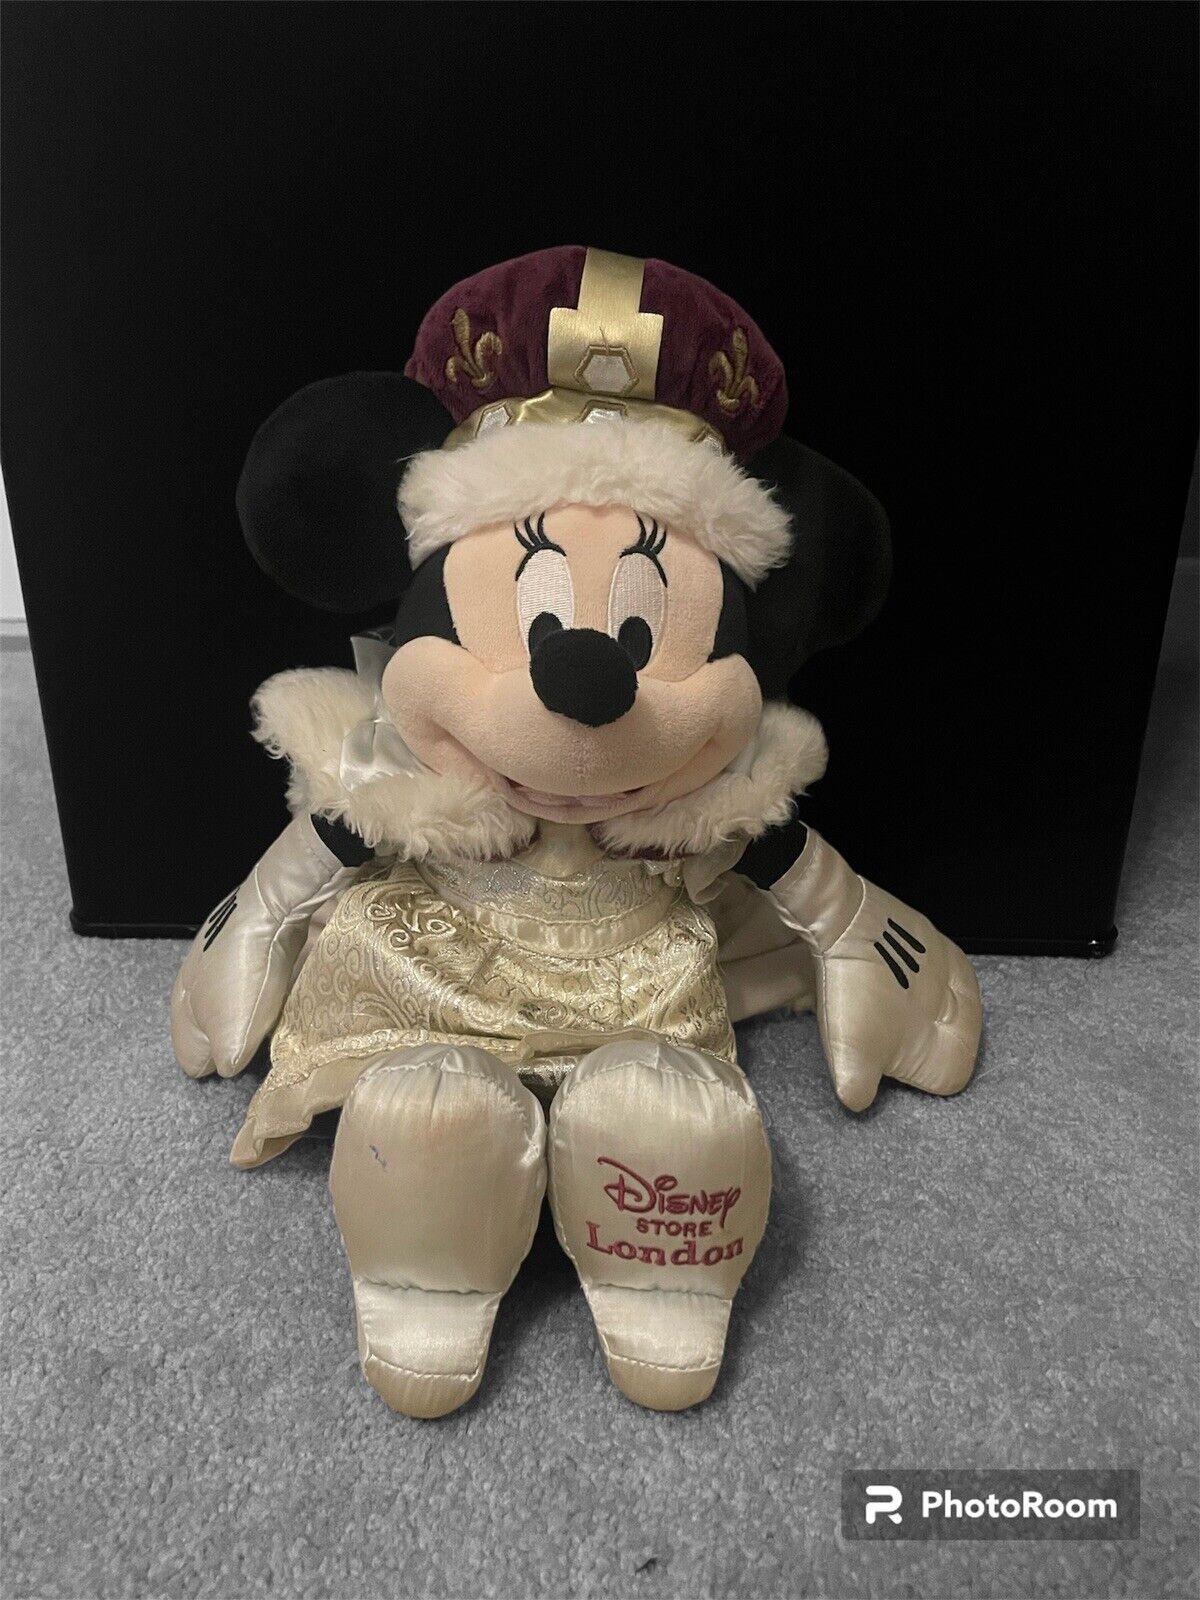 Disney Store London Minnie Mouse Queen 16” Plush UK London